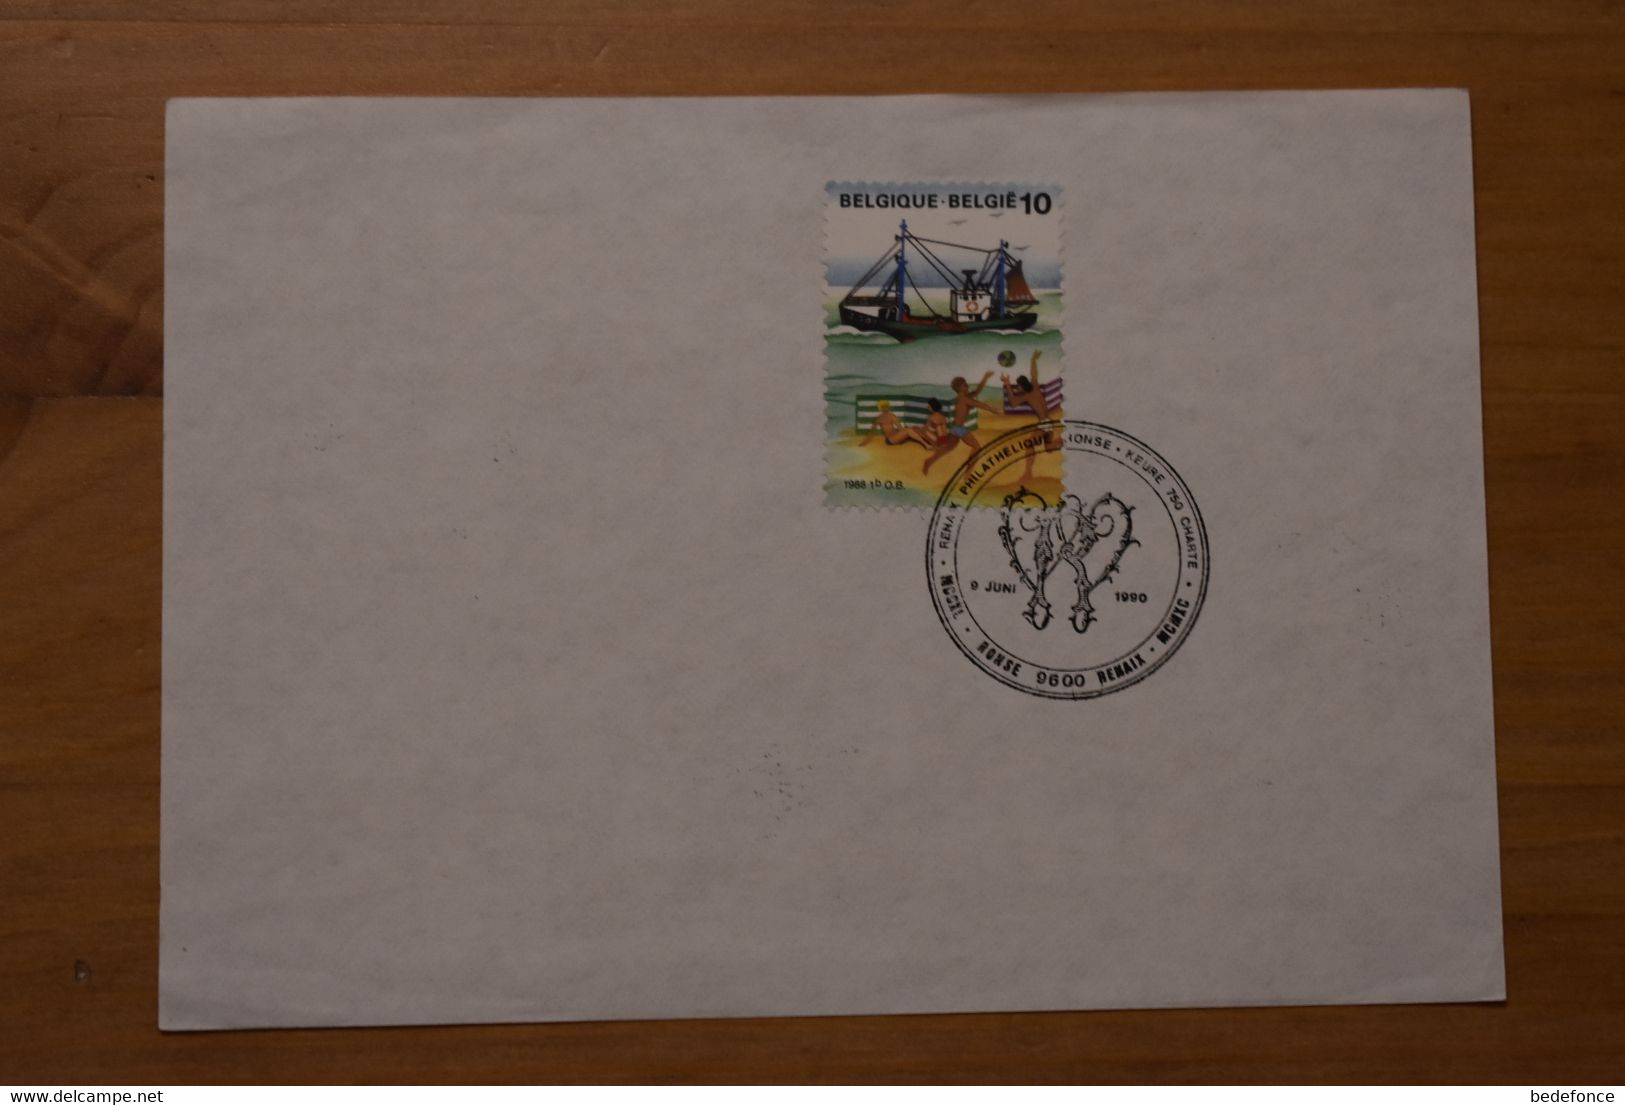 Carte Postale - Belgique - N° 2274 + Cachet Renaix Philatélique 09-06-1990 - Doorgangstempels